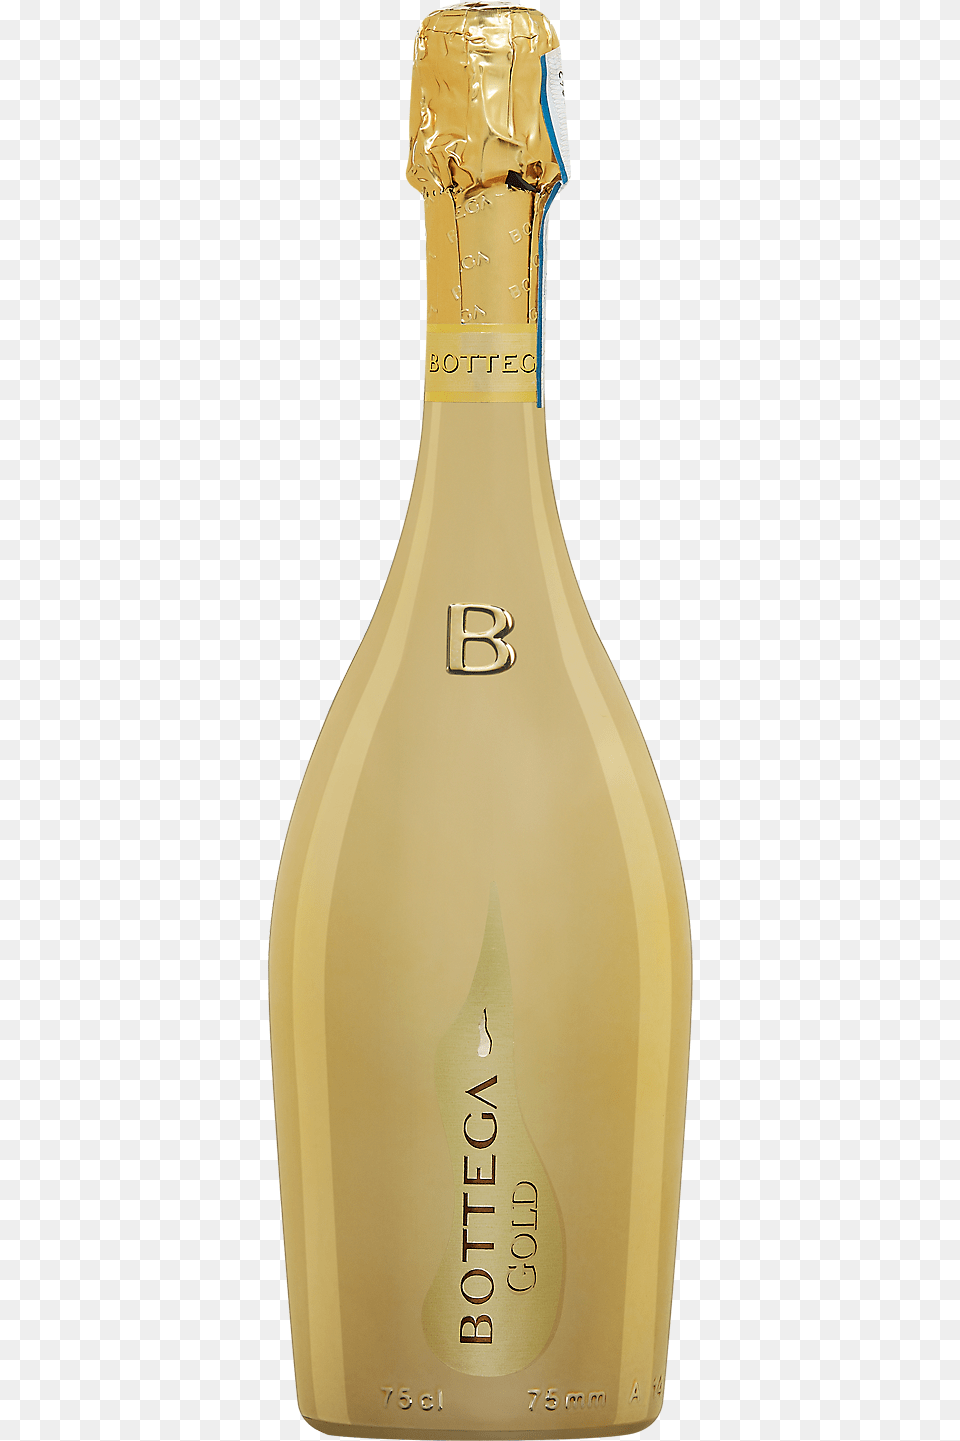 Bottega Gold Prosecco Glass Bottle, Alcohol, Beverage, Liquor, Tequila Png Image